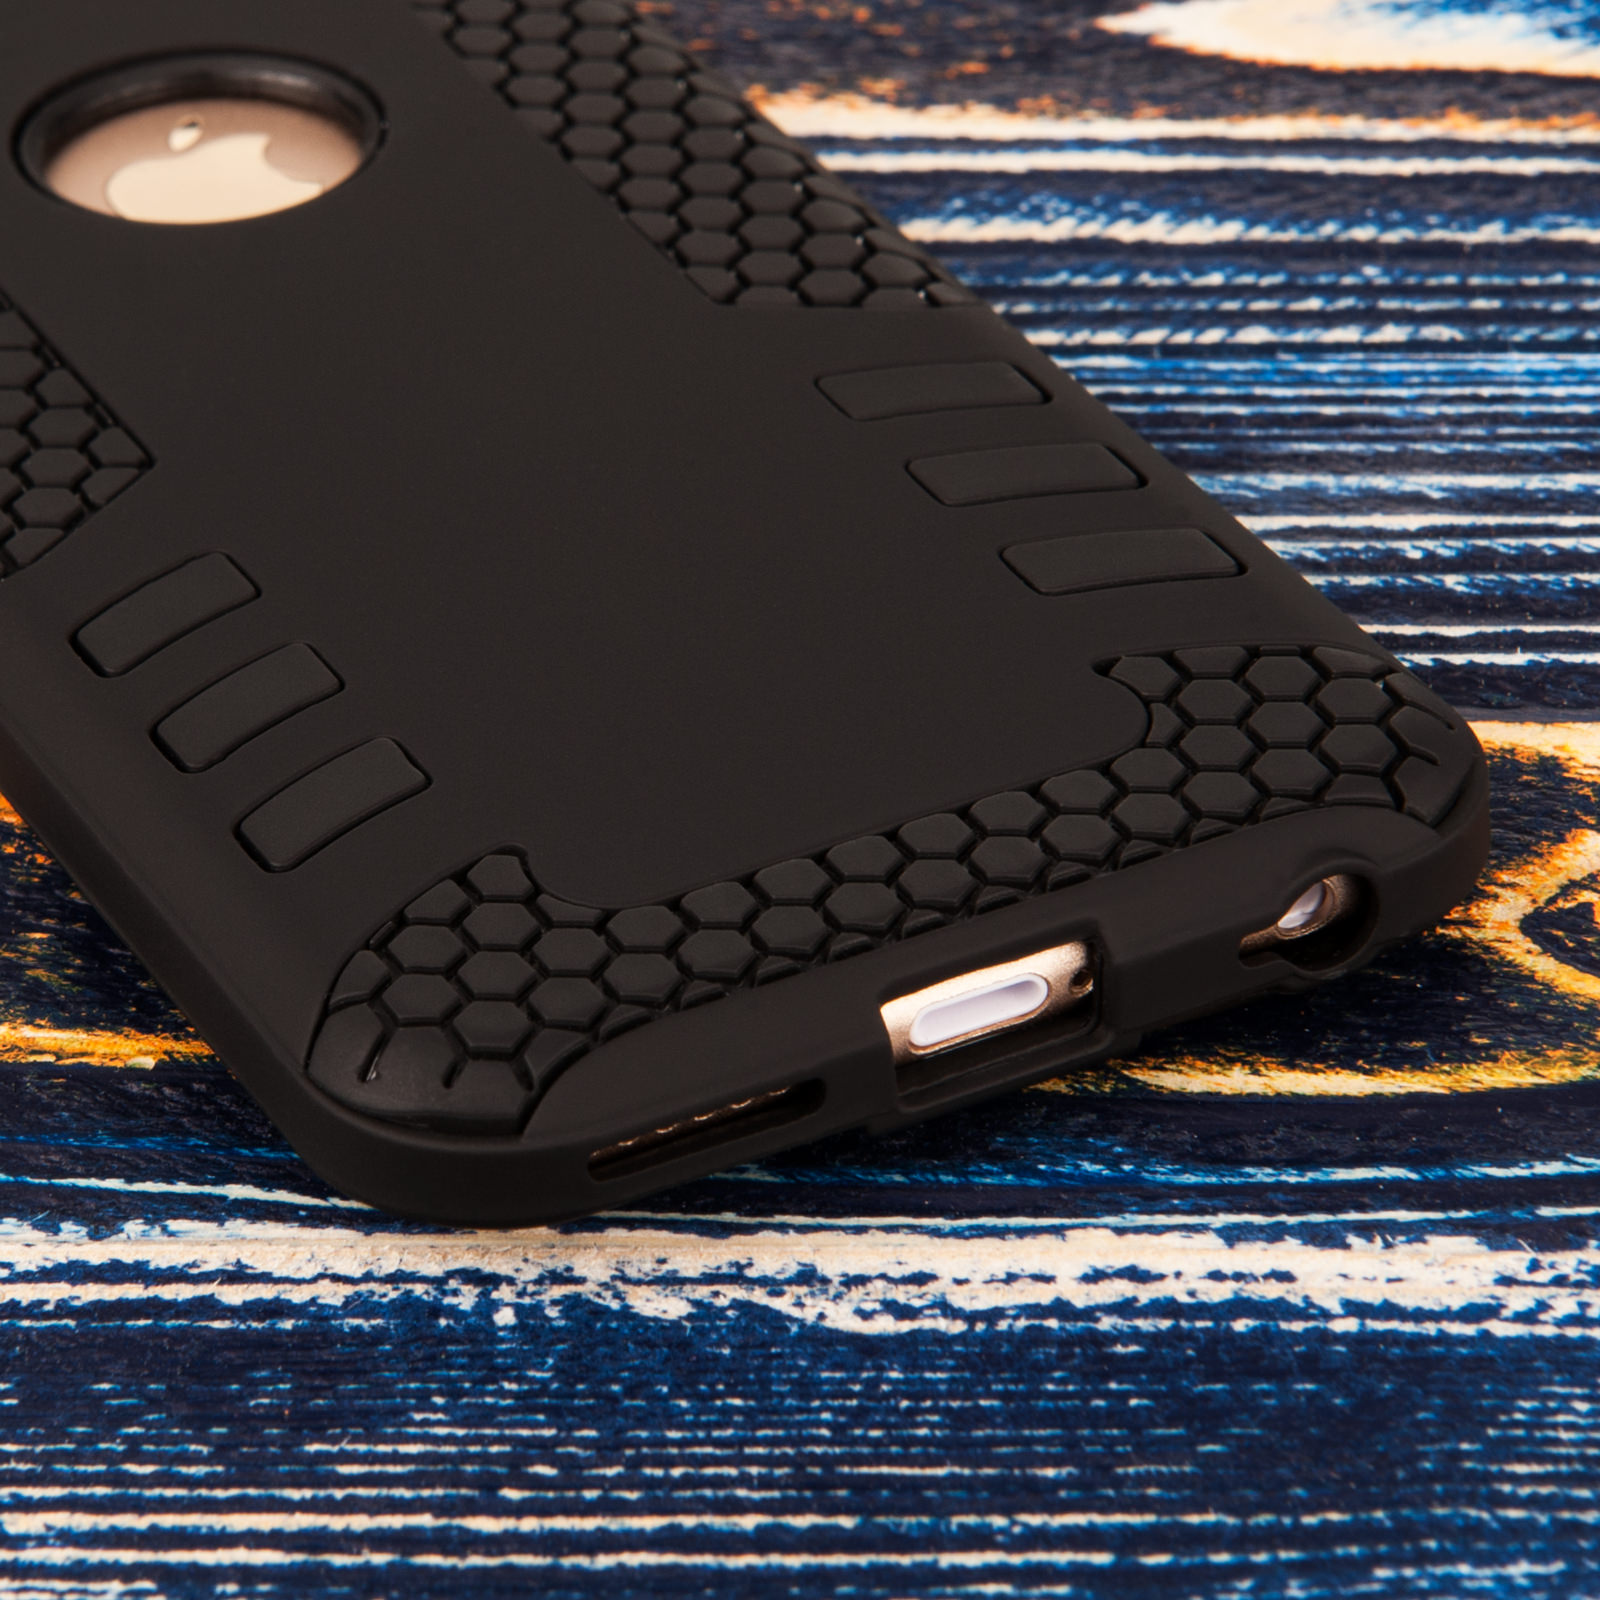 Caseflex iPhone 6 / 6s Border Combo Case - Black